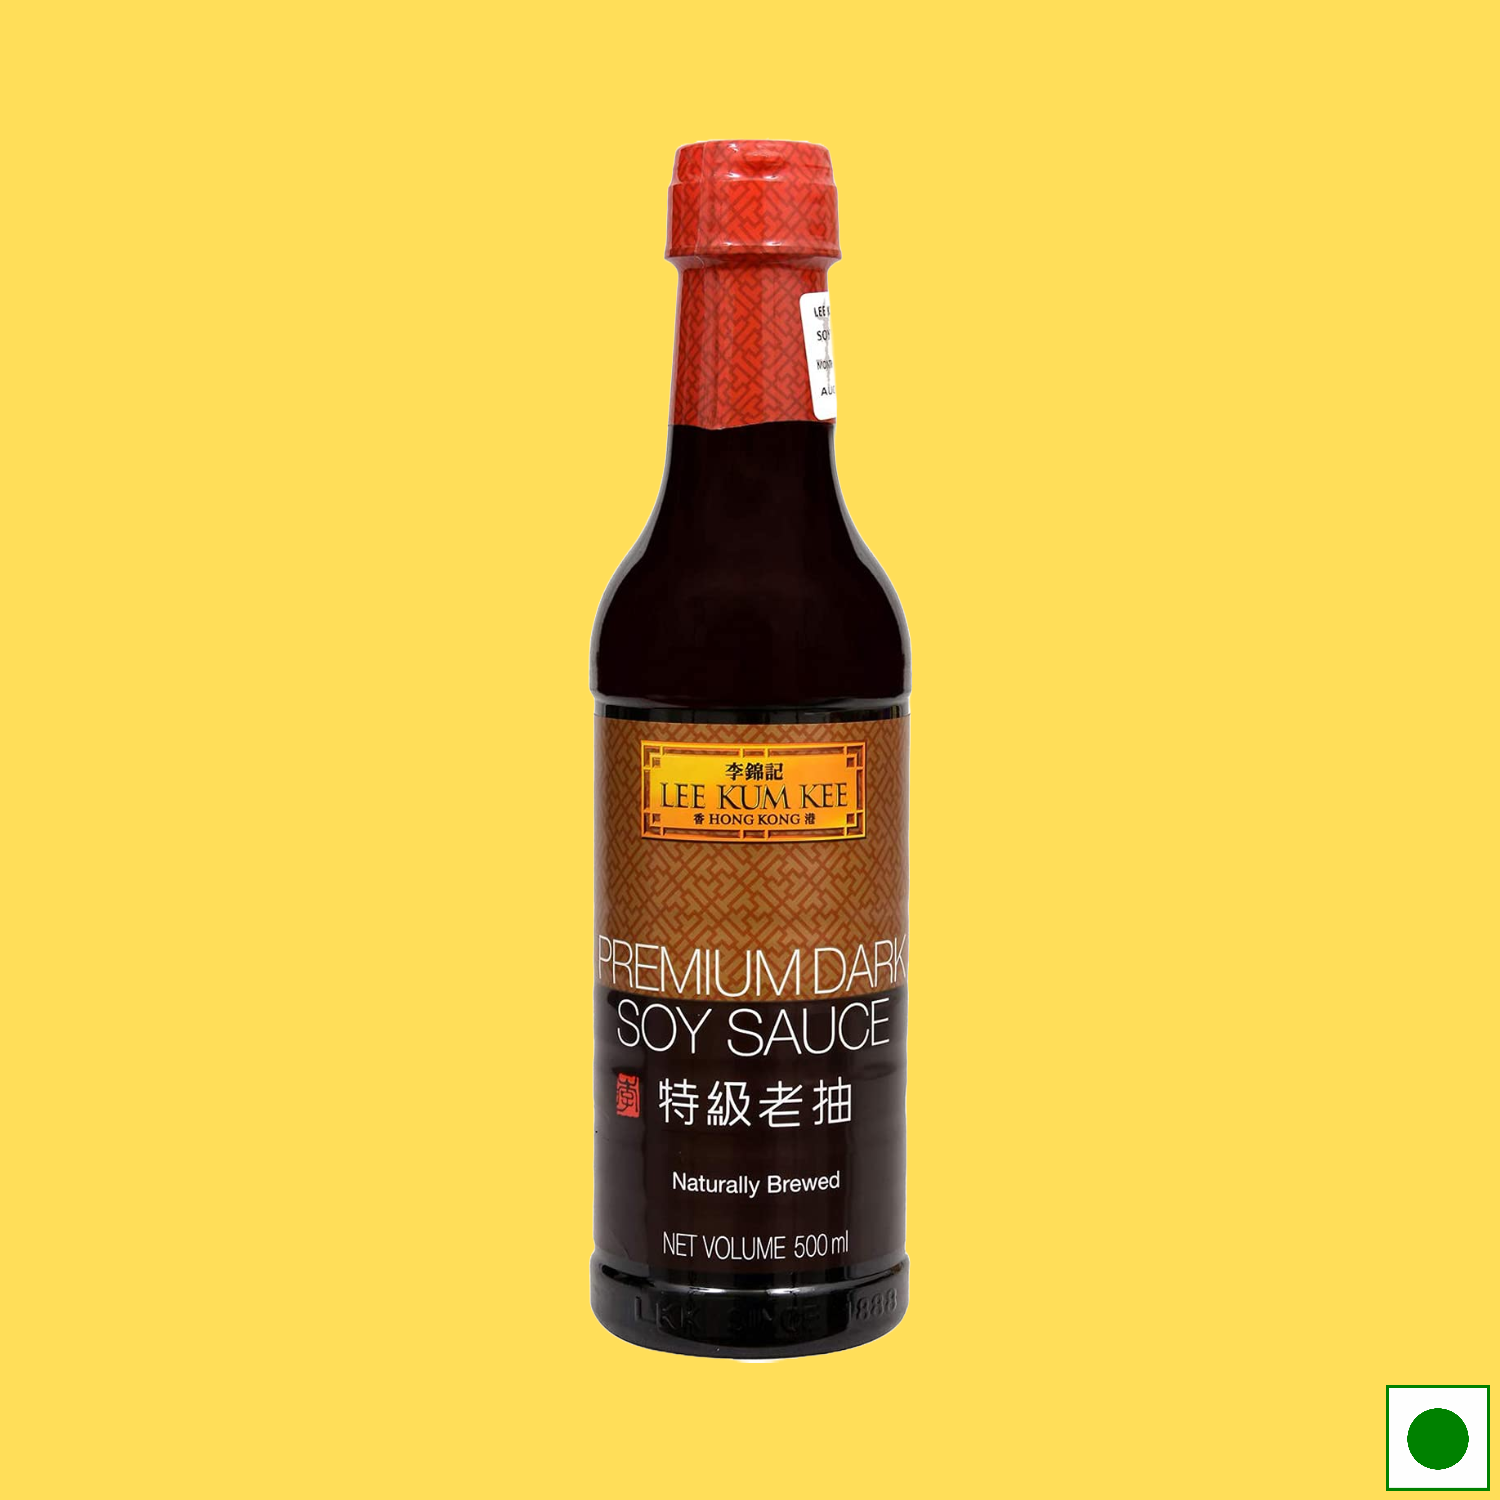 Lee Kum Kee Premium Dark Soy Sauce, 500ml (Imported)